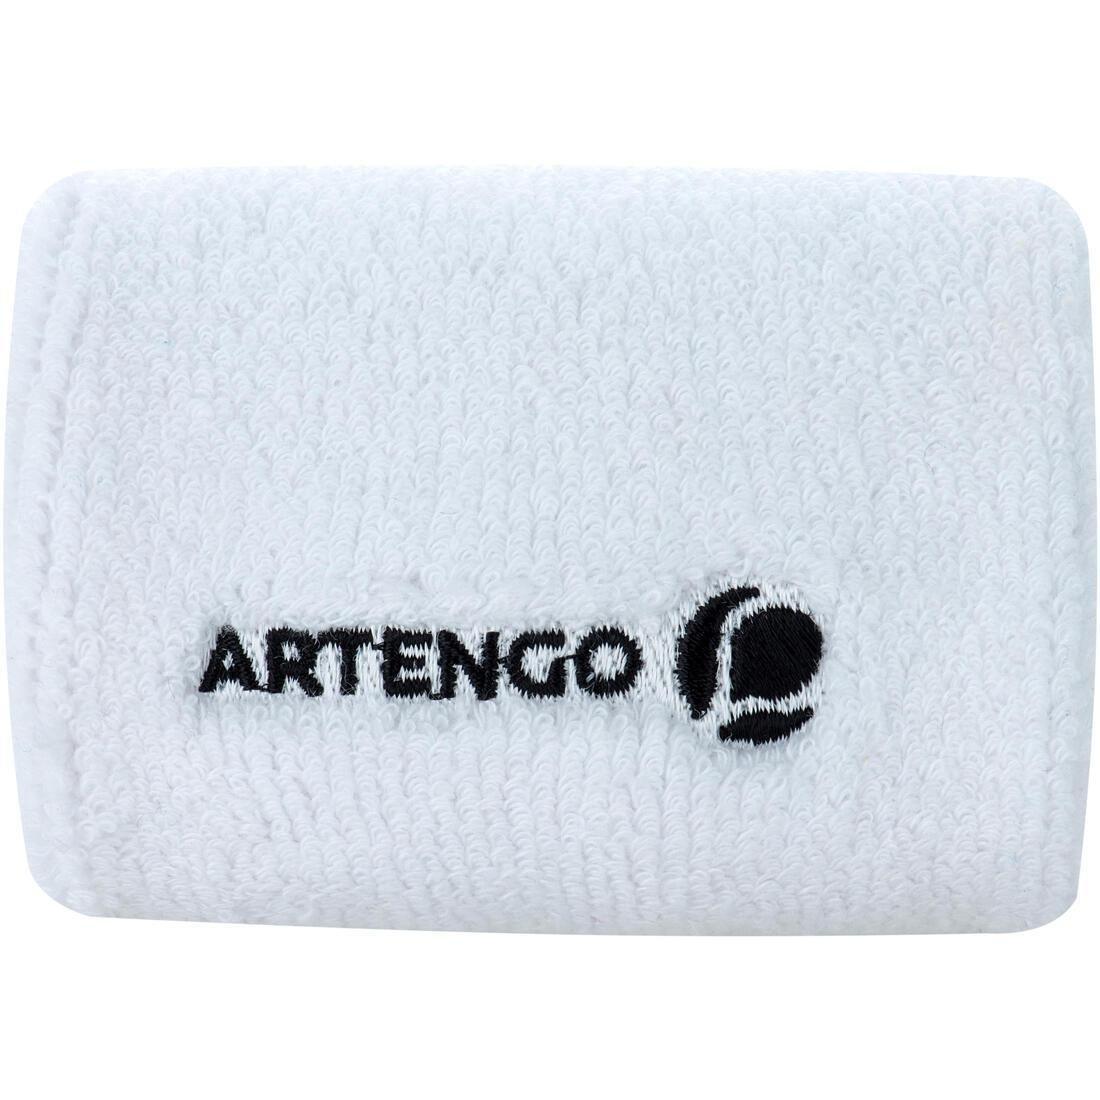 ARTENGO - Tennis Wristband Tp 100, Black